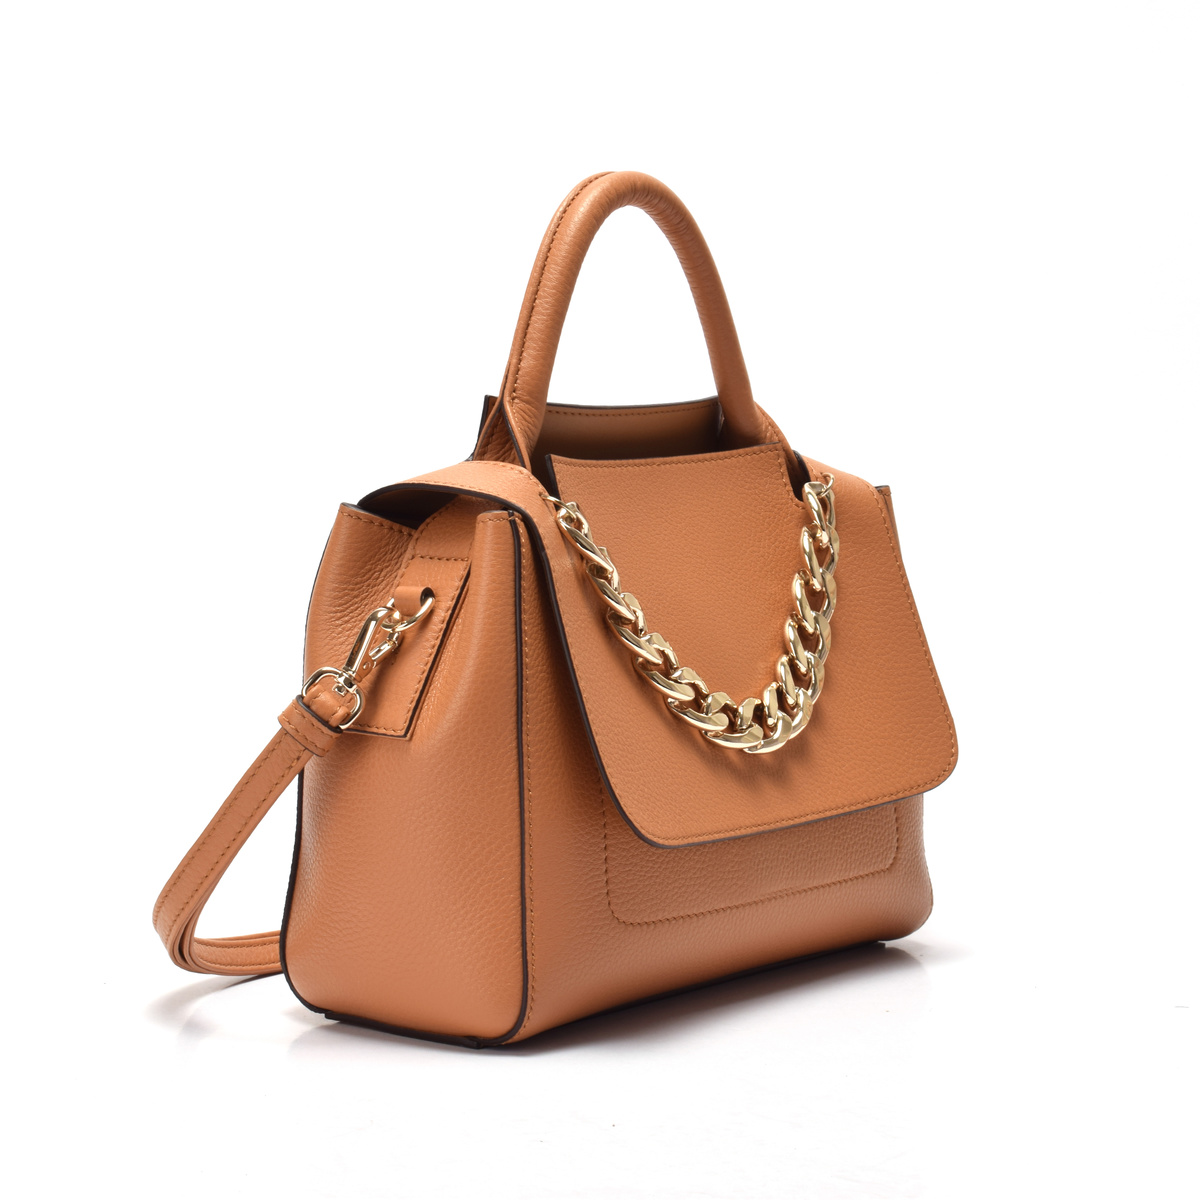 New jessica simpson handbags handbag Suppliers for women-2